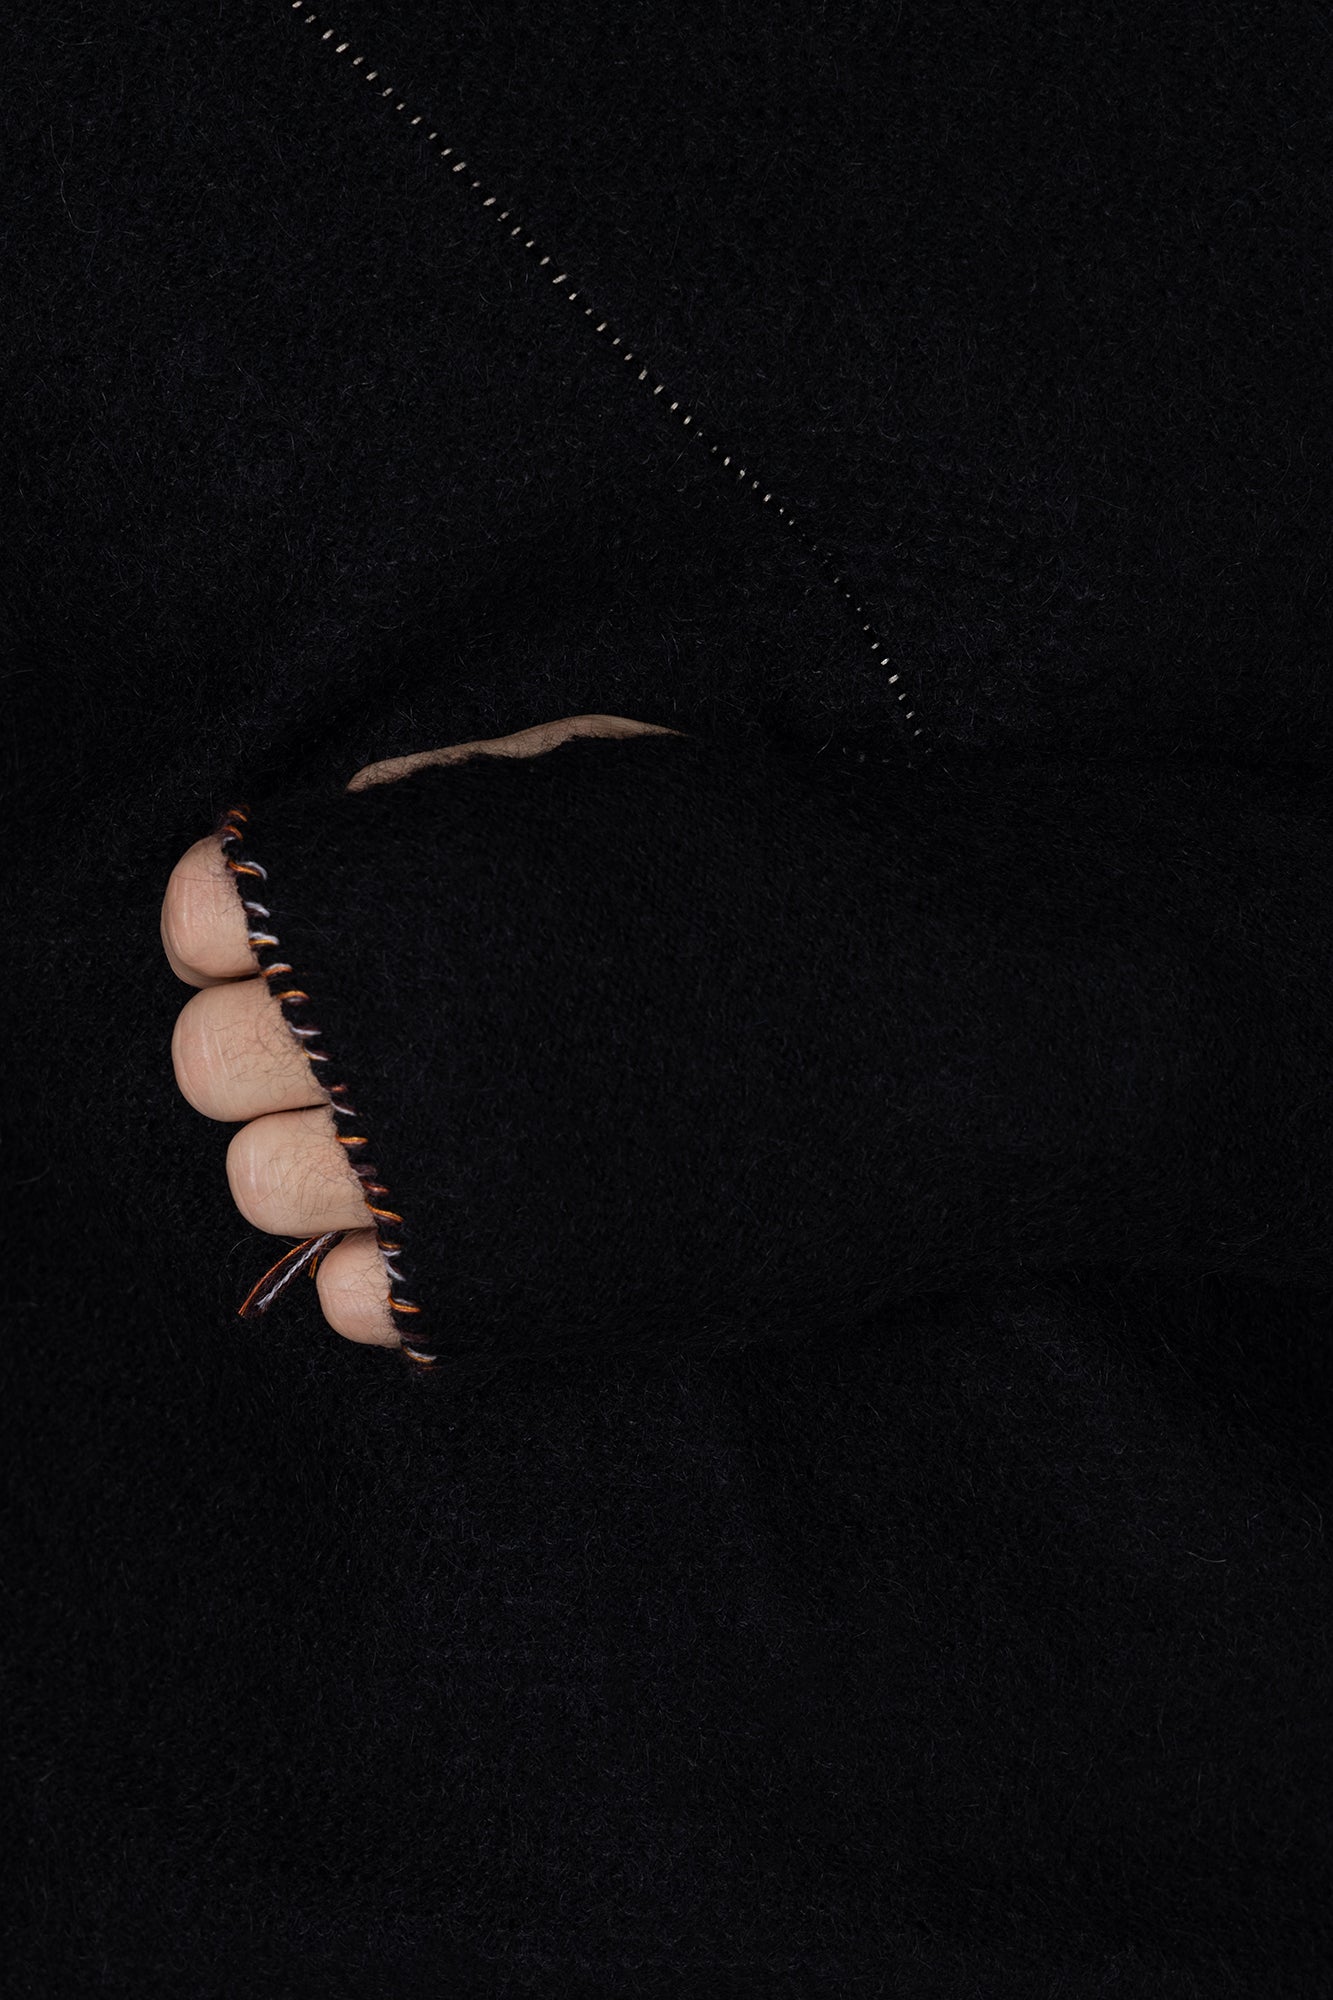 Black Paneled Sweater